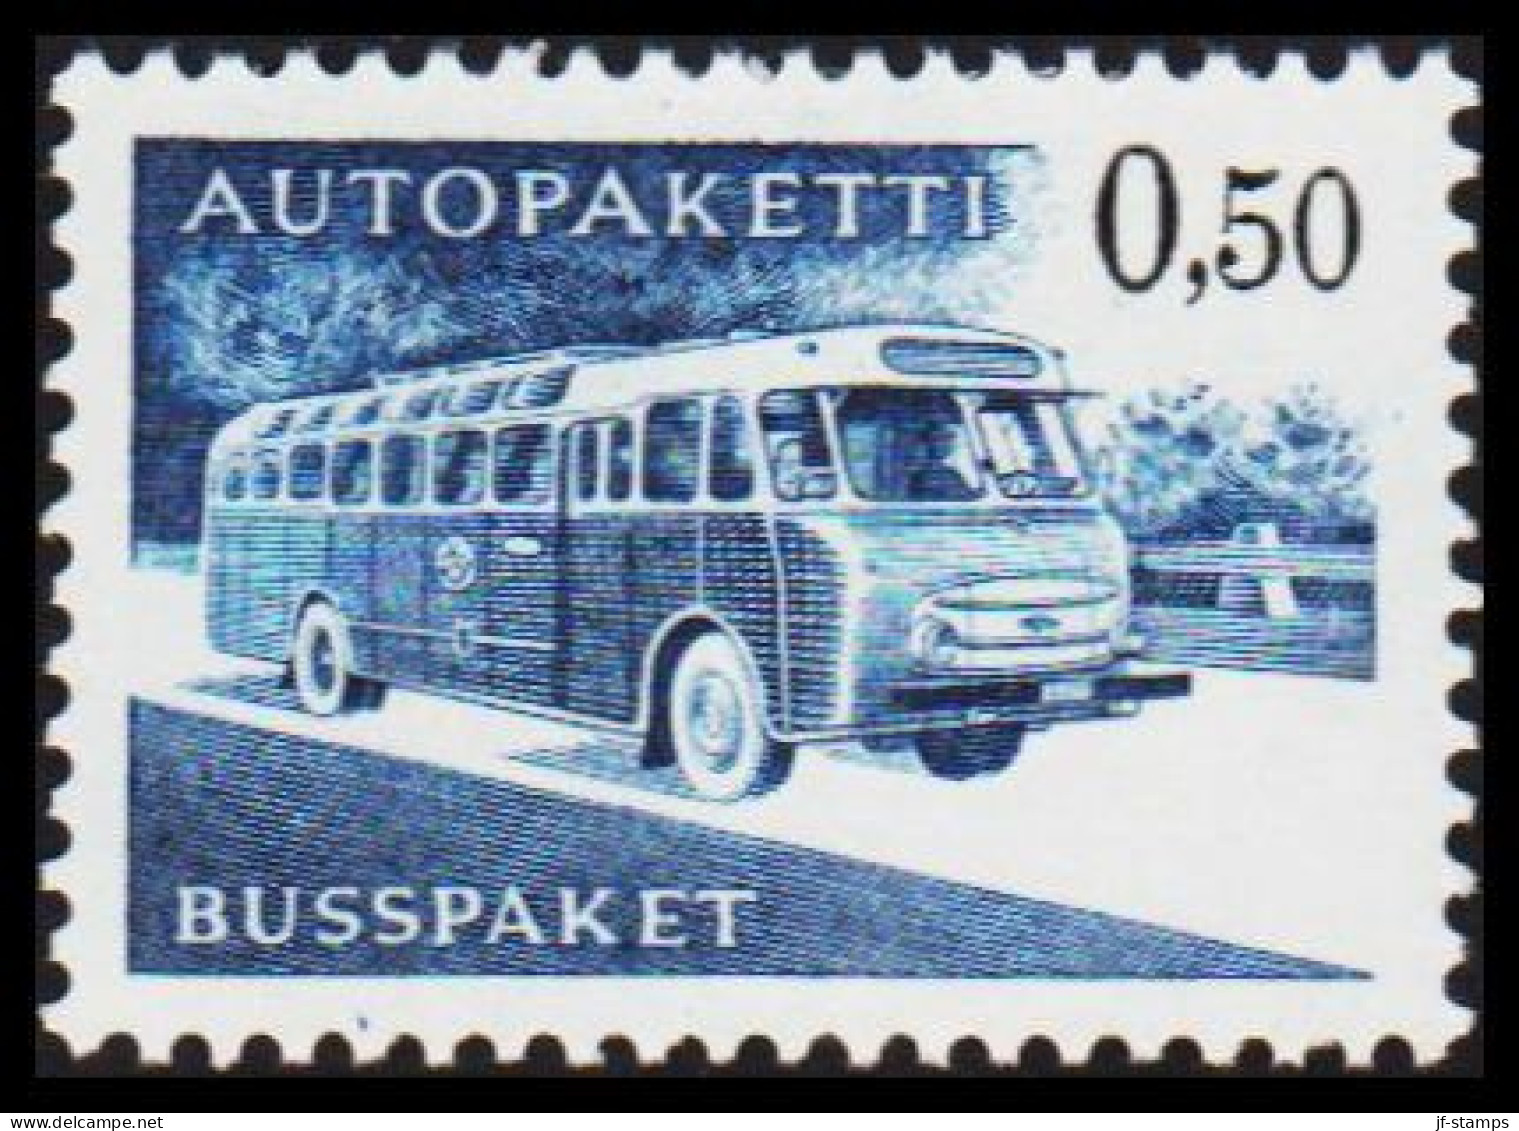 1963-1980. FINLAND. Mail Bus. 0,50 Mk. AUTOPAKETTI - BUSSPAKET Never Hinged. Normal Paper.... (Michel AP 12x) - JF535631 - Pakjes Per Postbus